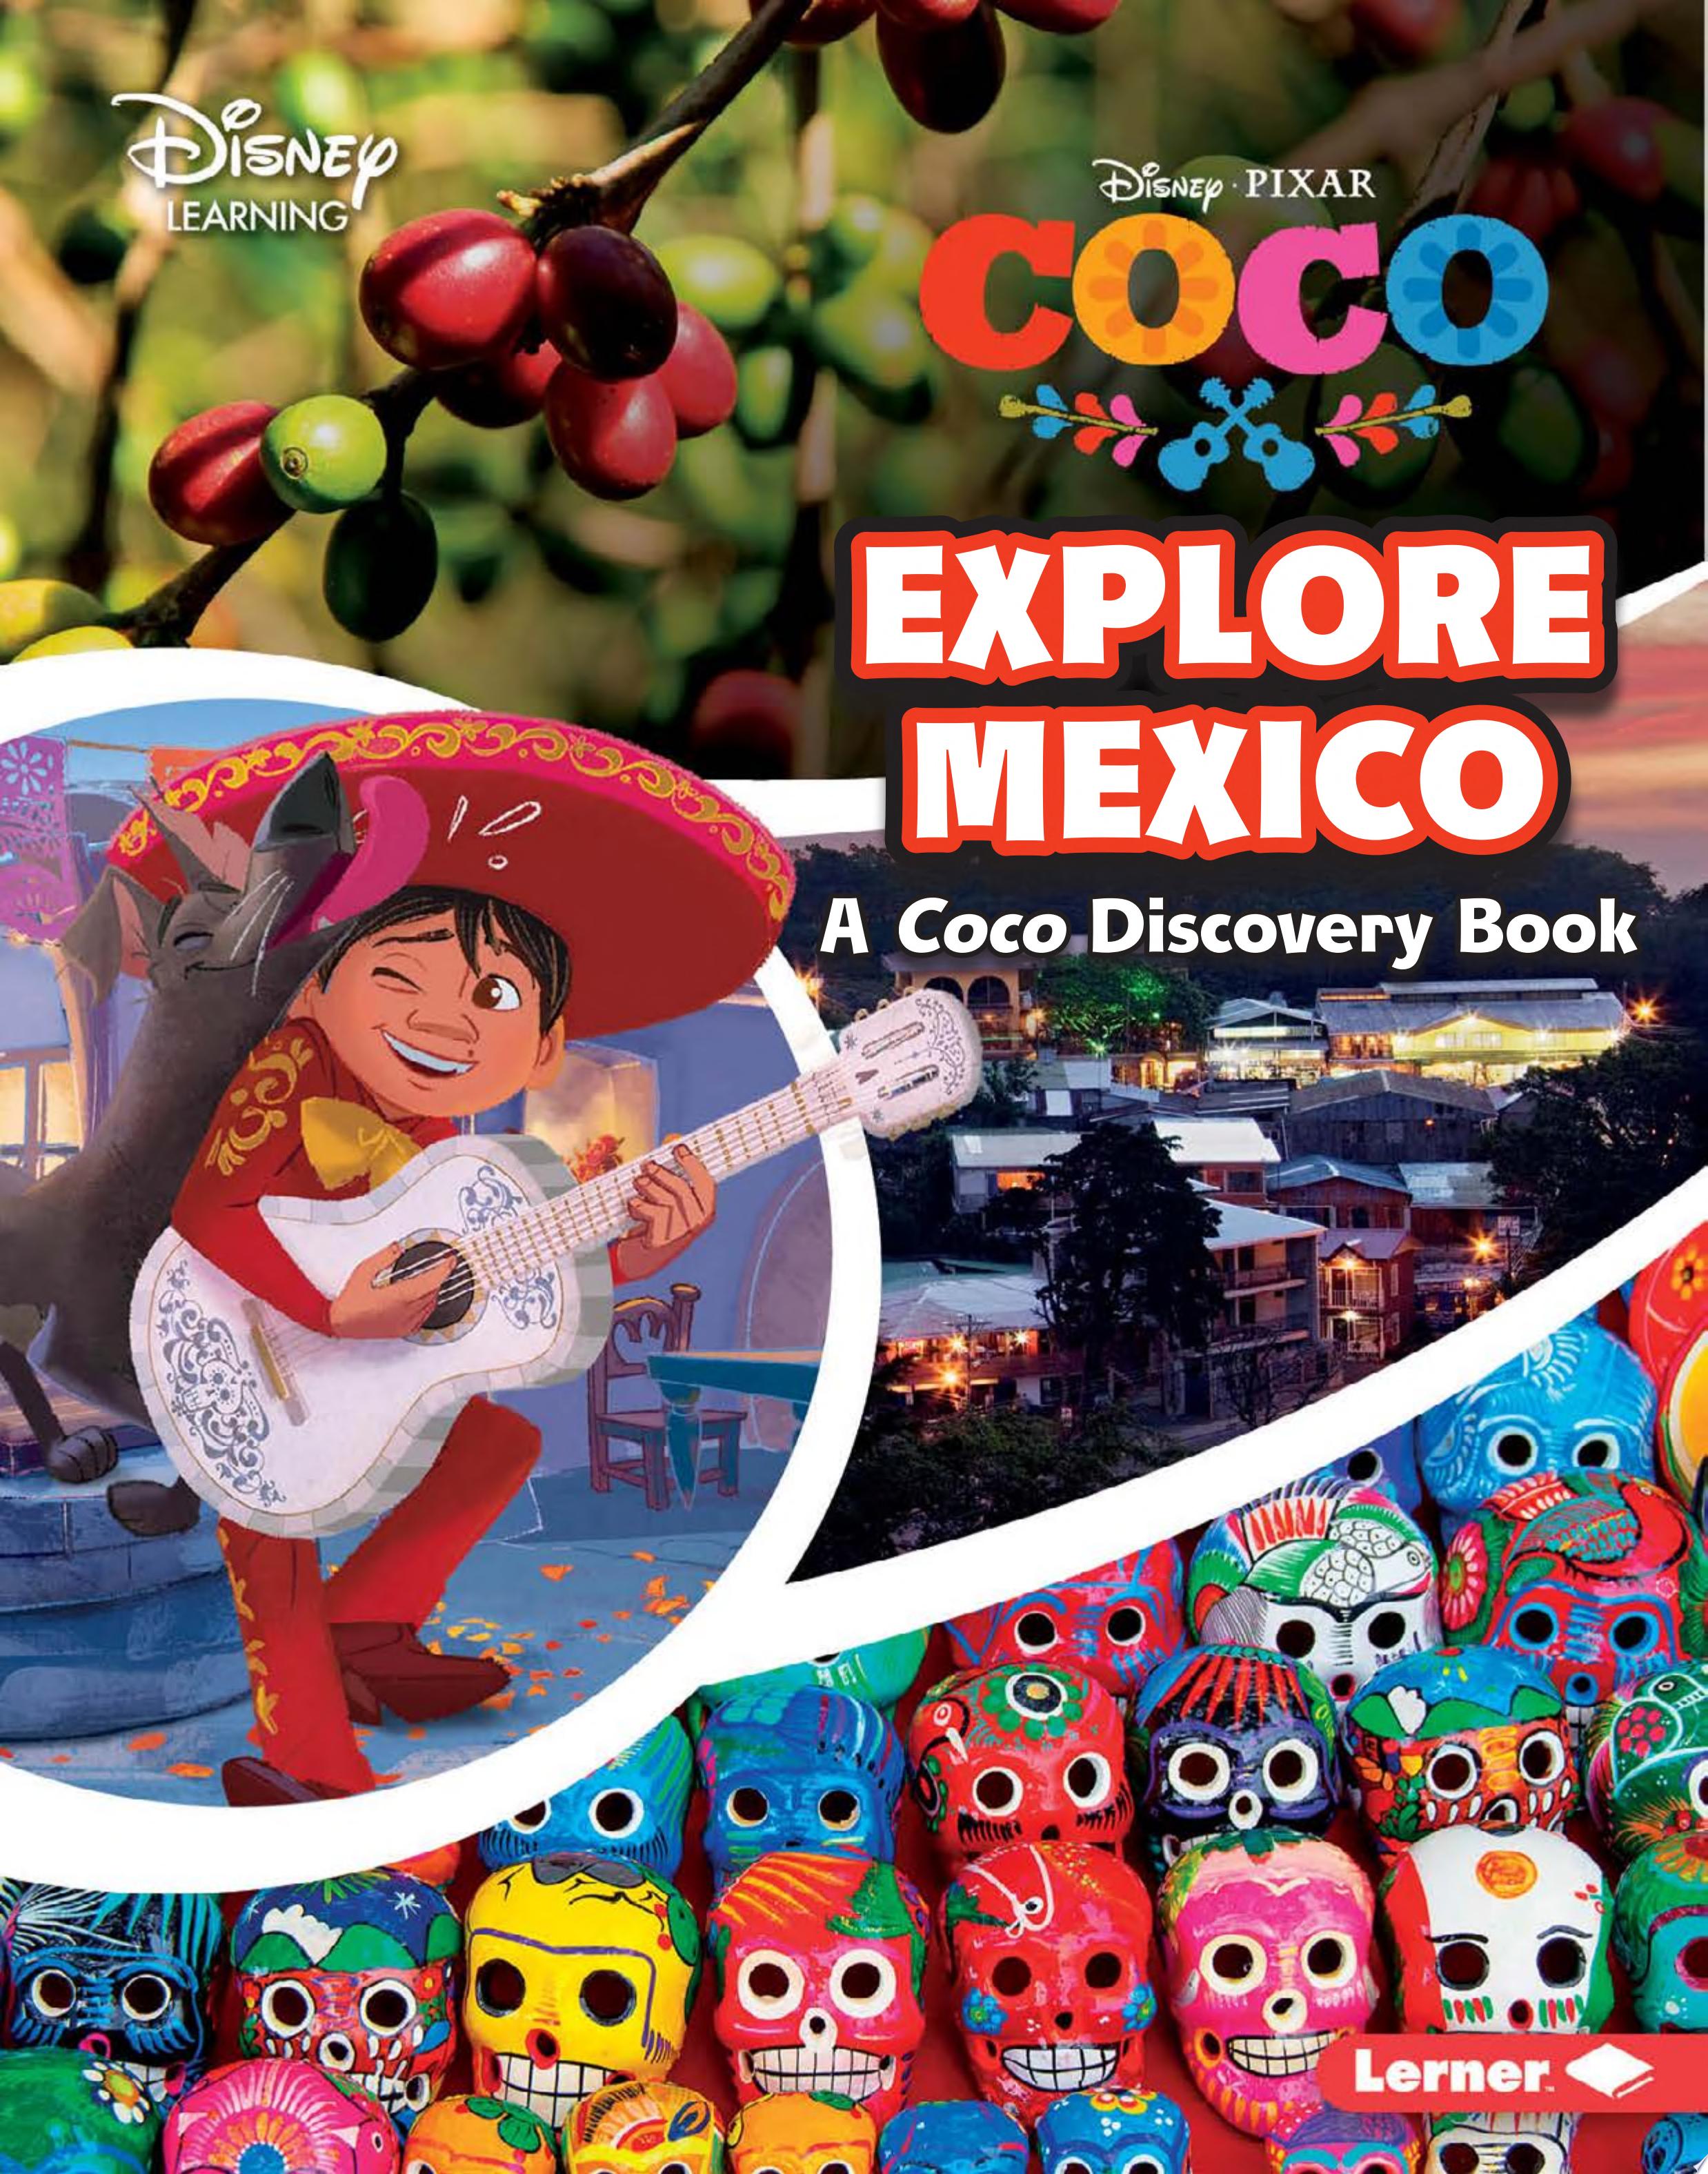 Image for "Explore Mexico"